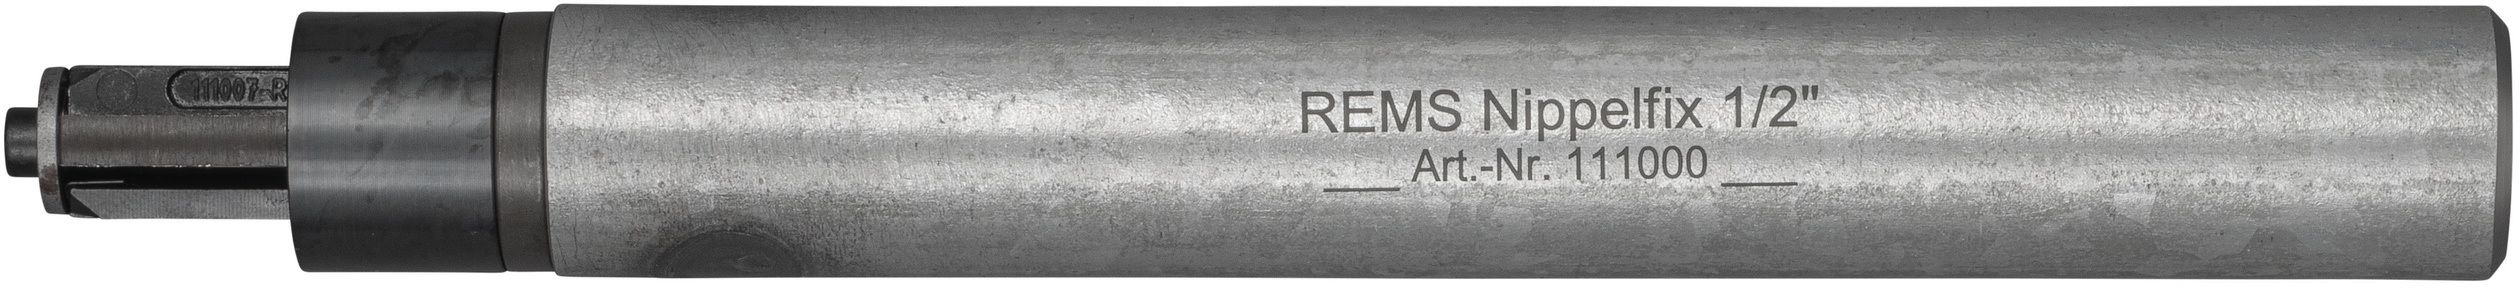 REMS Nippelfix 111300, 11/4" - Sanitärwerkzeuge